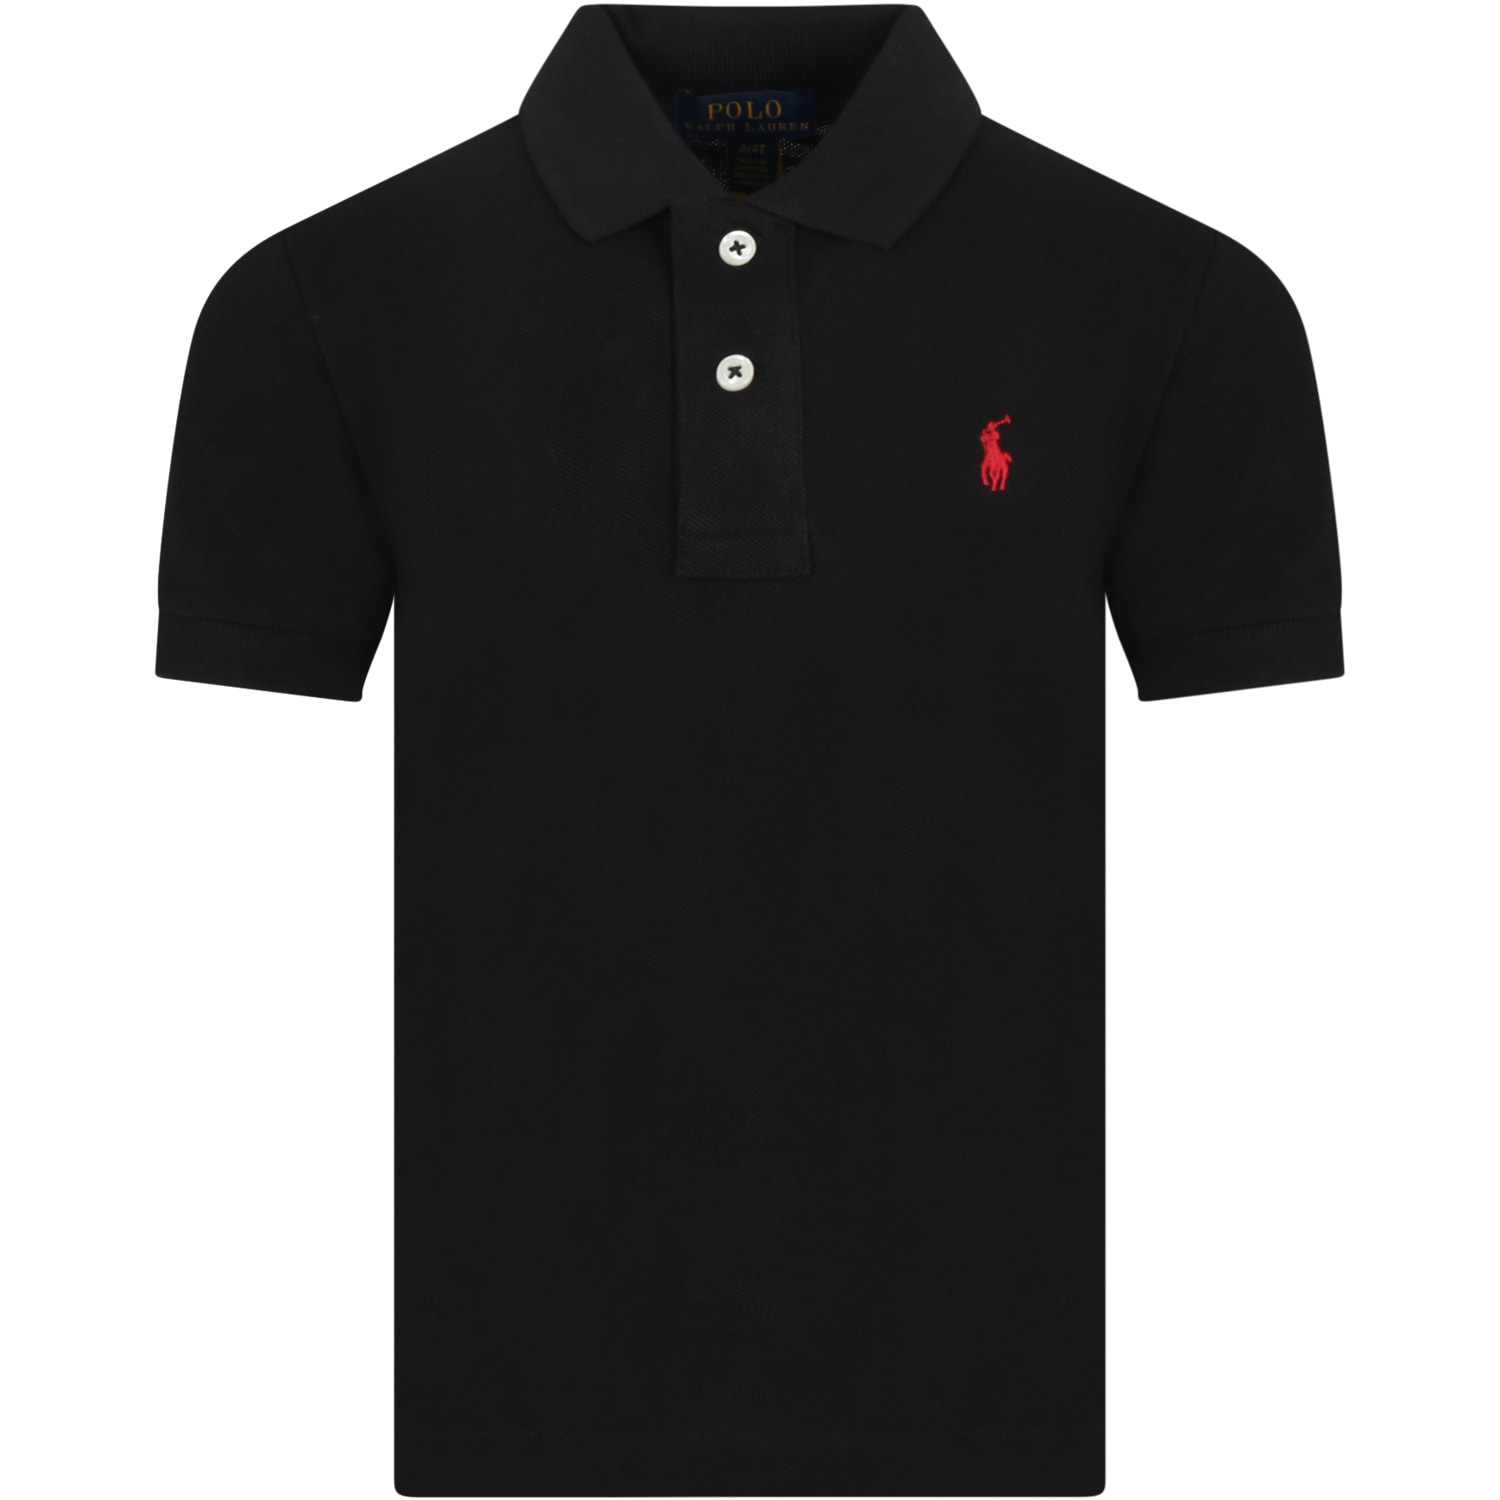 Ralph Lauren Black Polo Shirt For Kids With Pony Logo